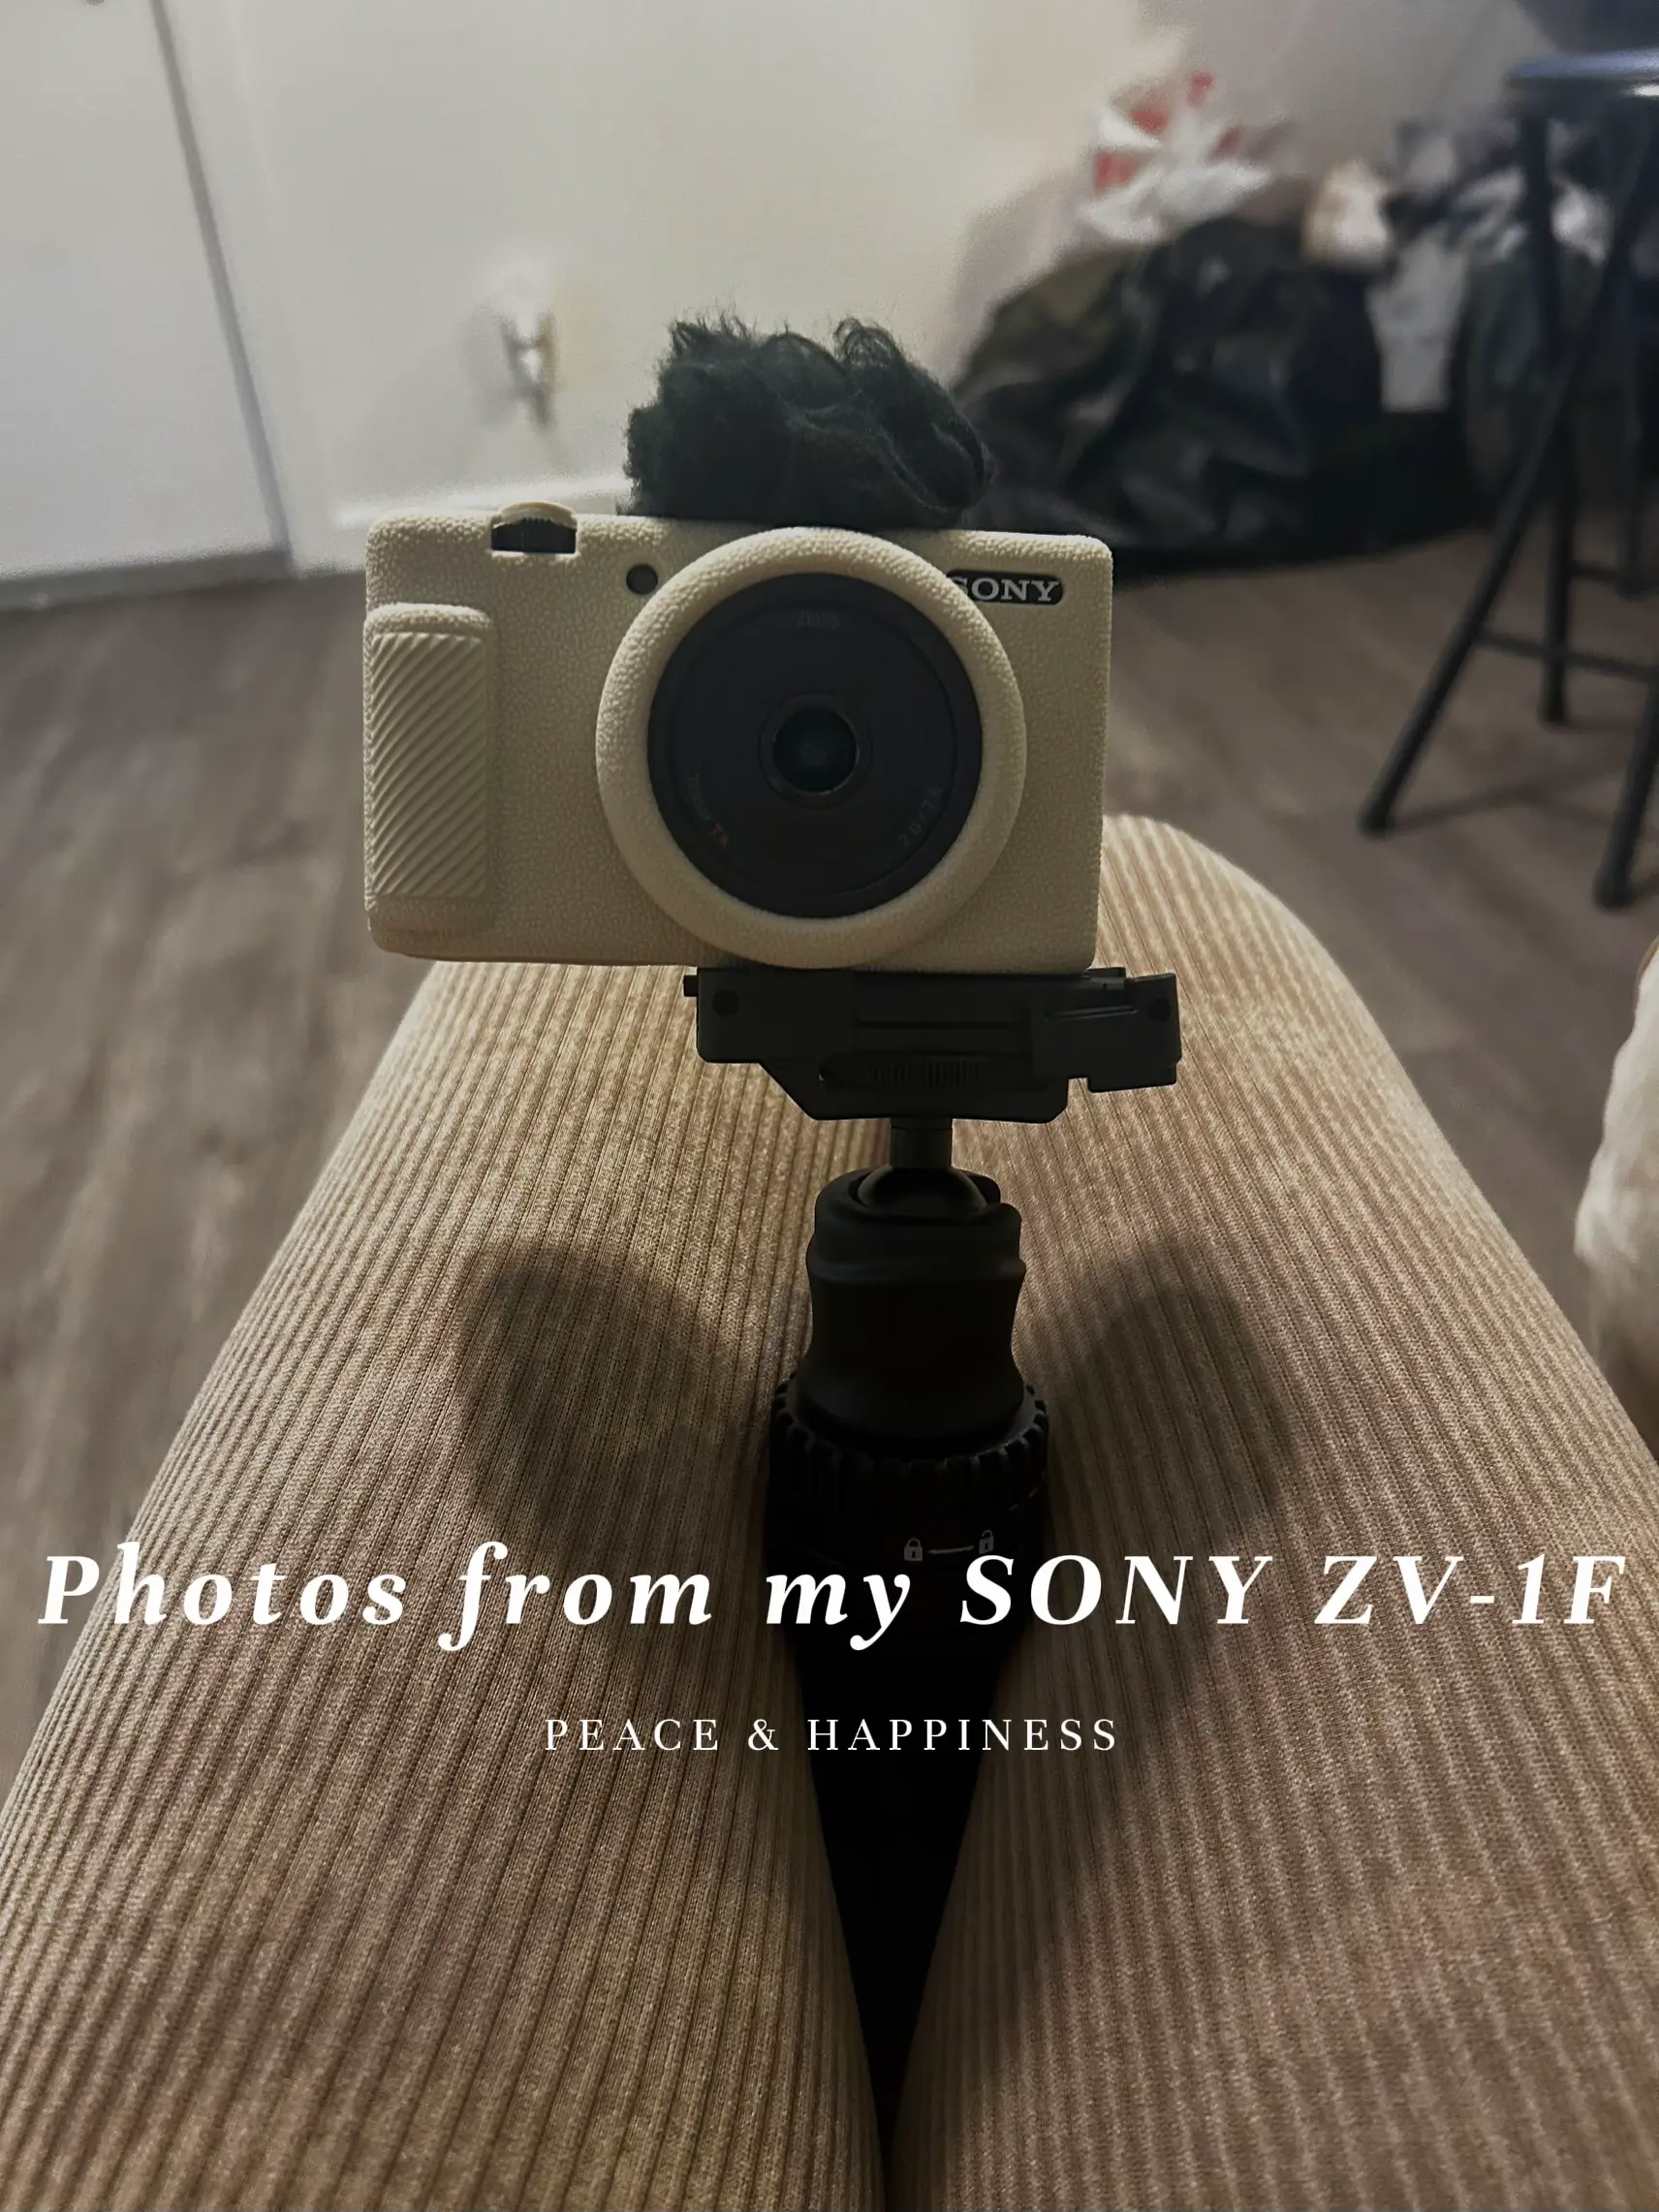 Sony ZV1 II M2 4K 20.1MP Digital Camera - Black (ZV1M2/B) for sale online